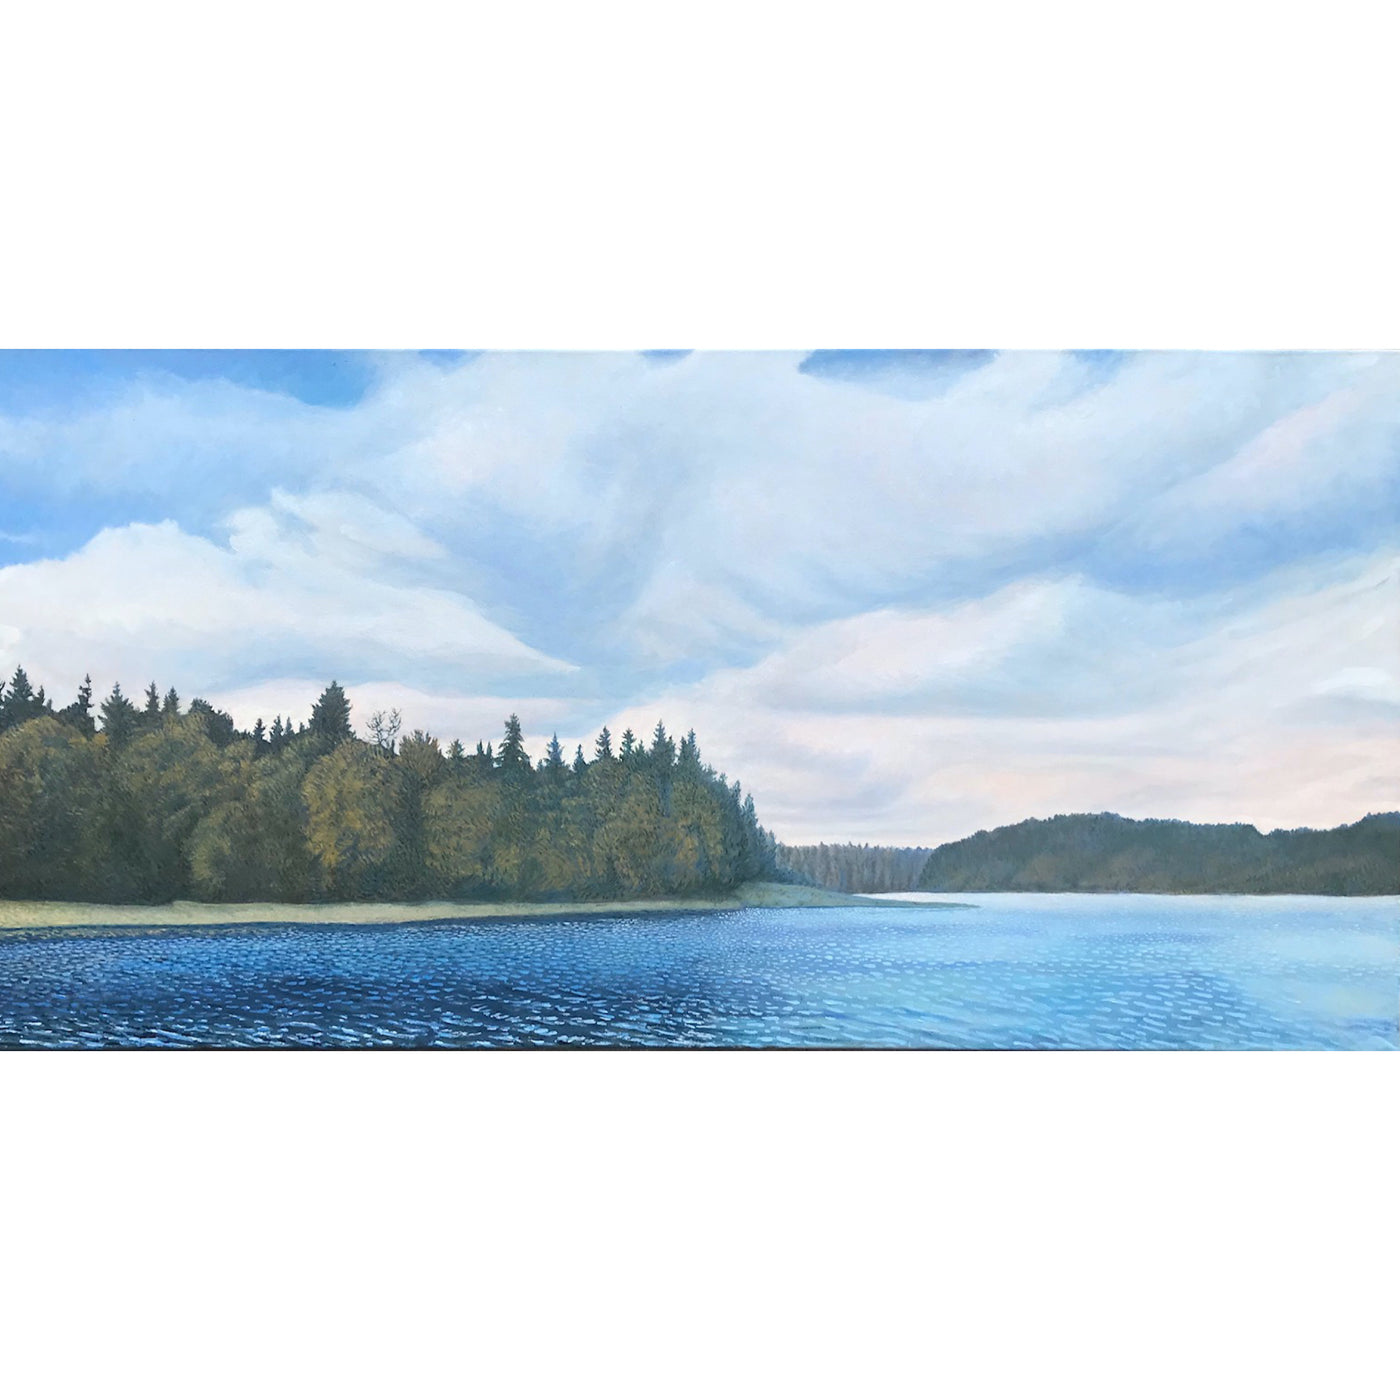 Arrowhead Lake - John Kinsella-Painting-Eclipse Art Gallery